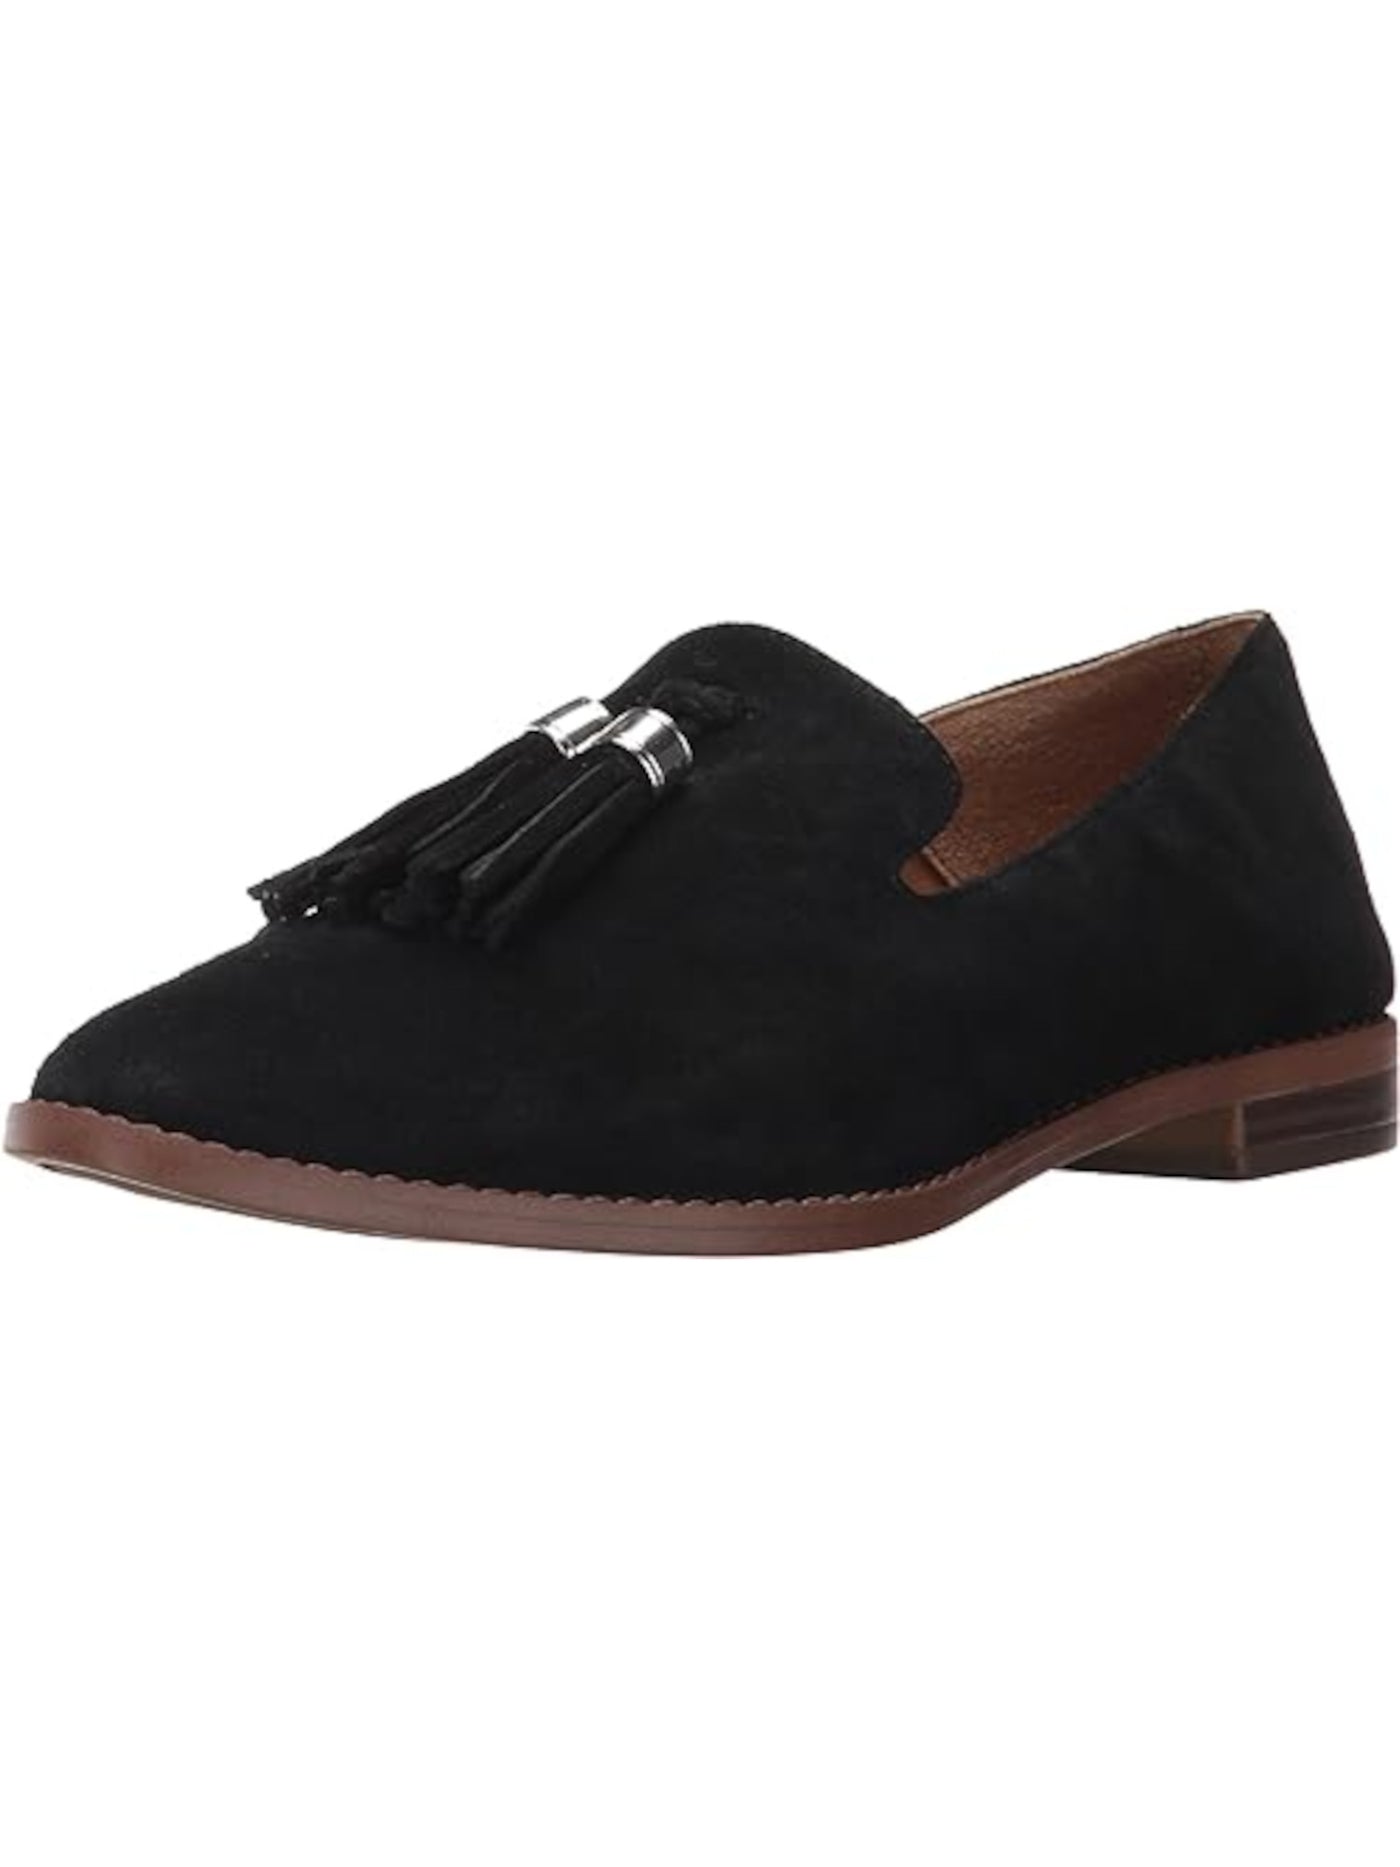 FRANCO SARTO Womens Black Tasseled Cushioned Hadden Almond Toe Block Heel Slip On Leather Loafers Shoes 9.5 M